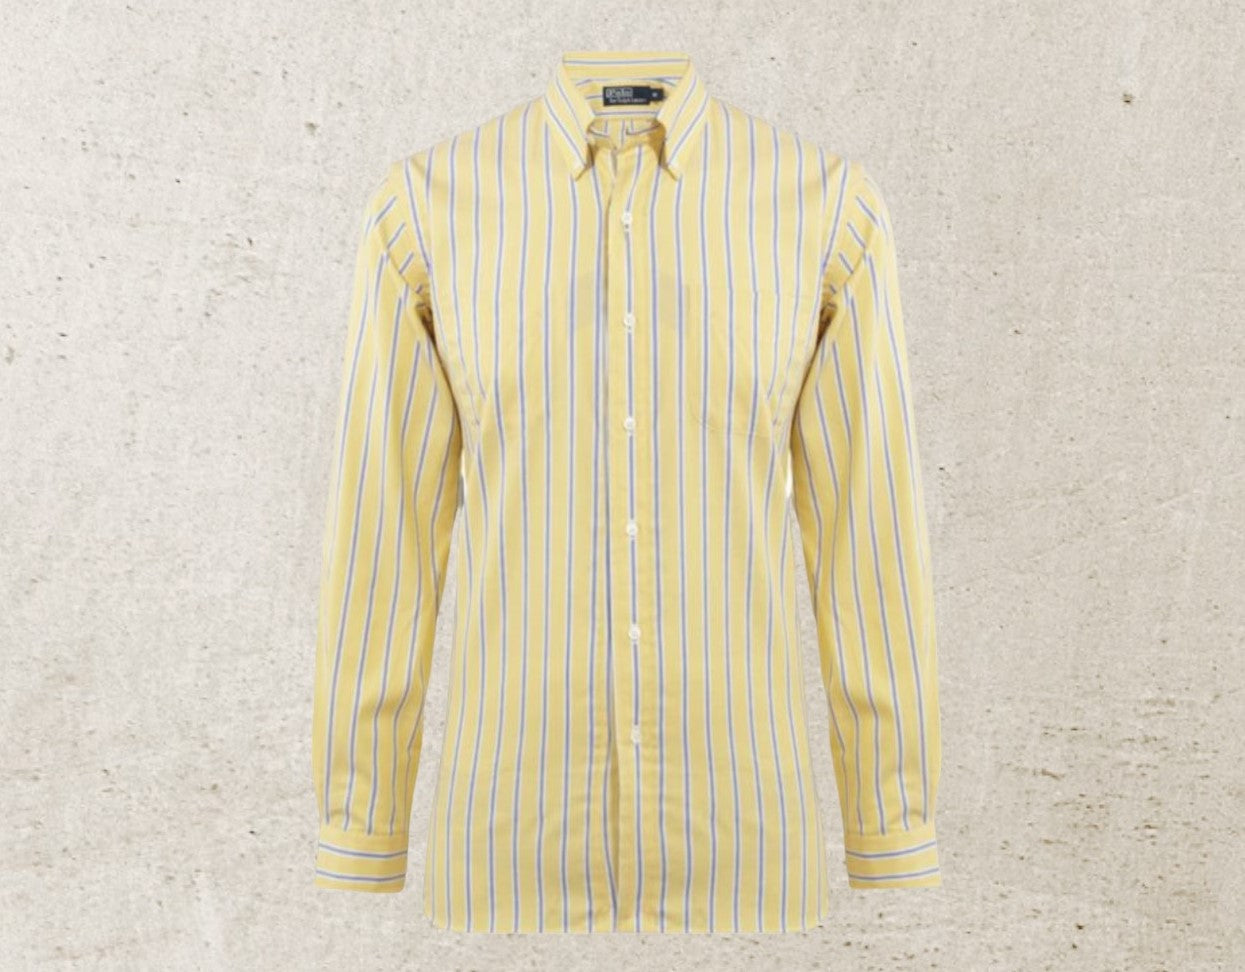 Polo Yellow & Blue Striped Mans Oxford shirt Size XL 17.5" neck RRP £120 Timeless Fashions